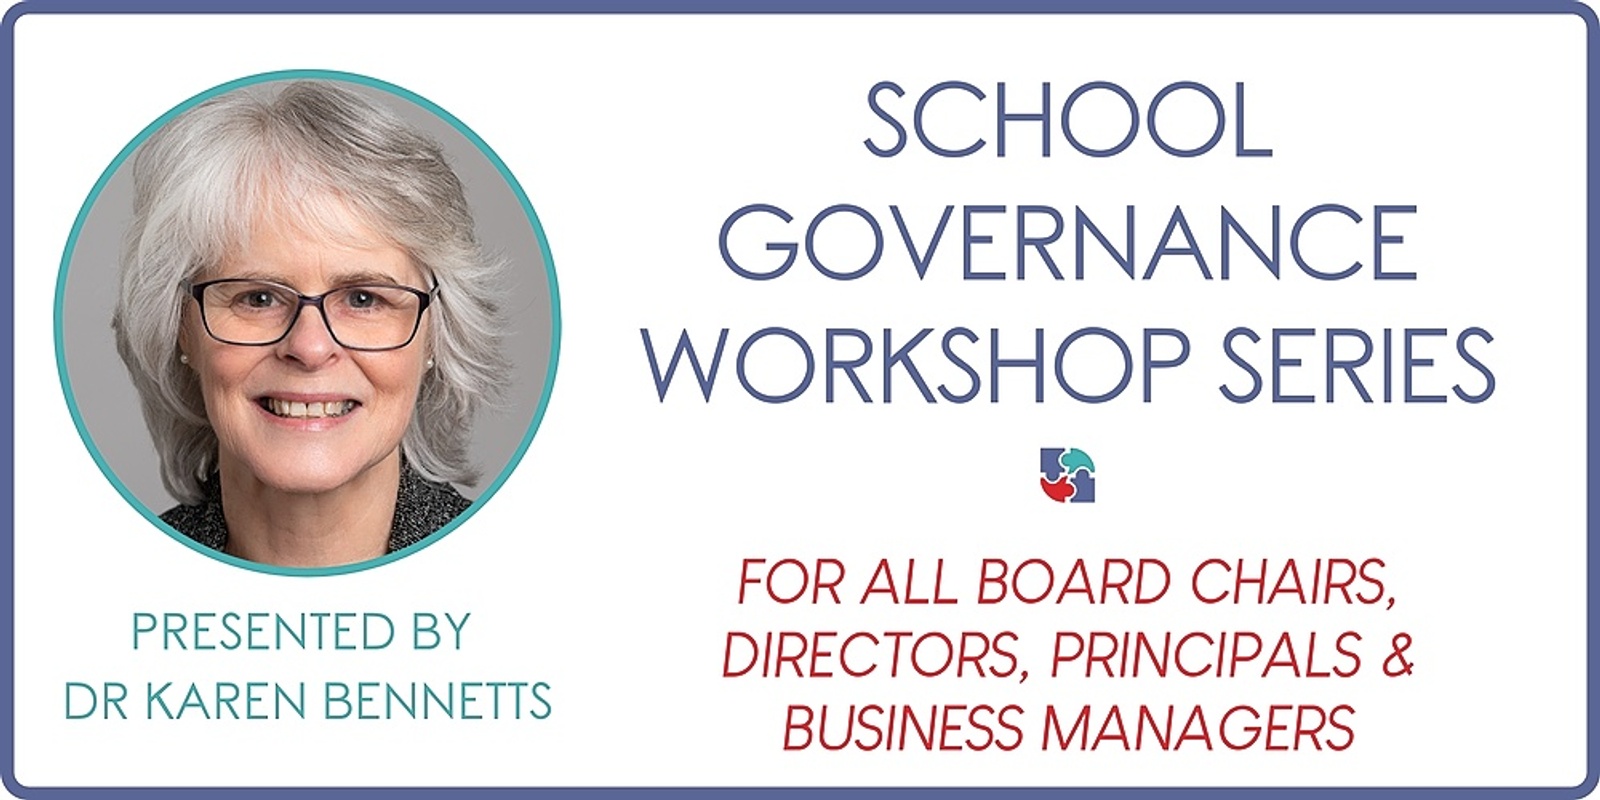 School Governance Workshop Series